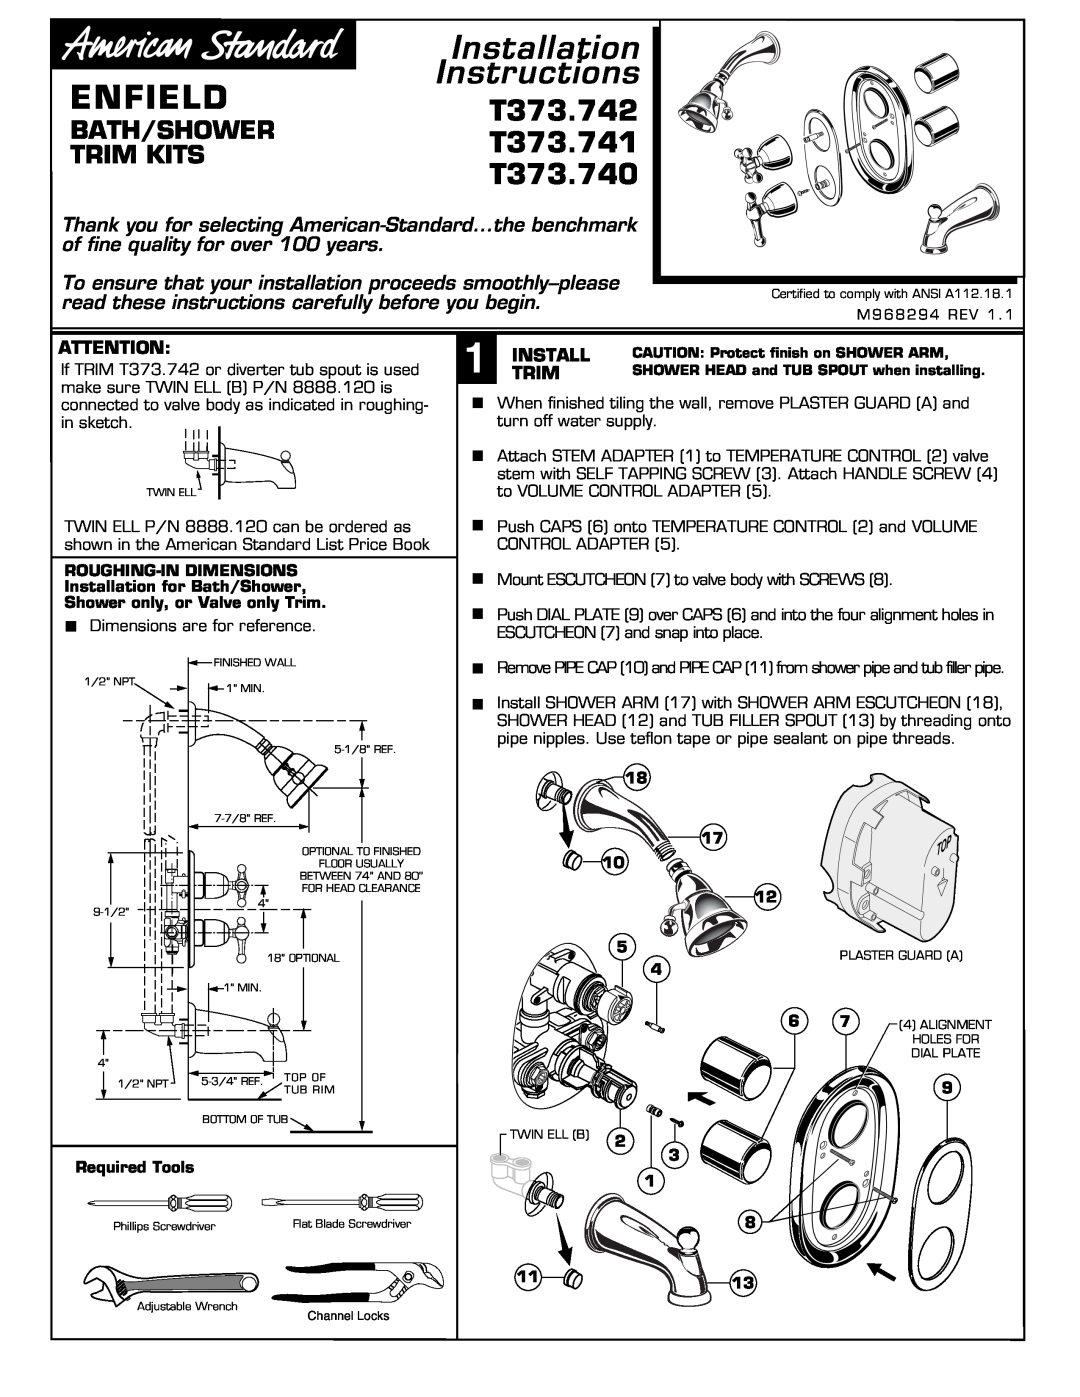 American Standard installation instructions ENFIELDT373.742, T373.740, BATH/SHOWERT373.741 TRIM KITS 